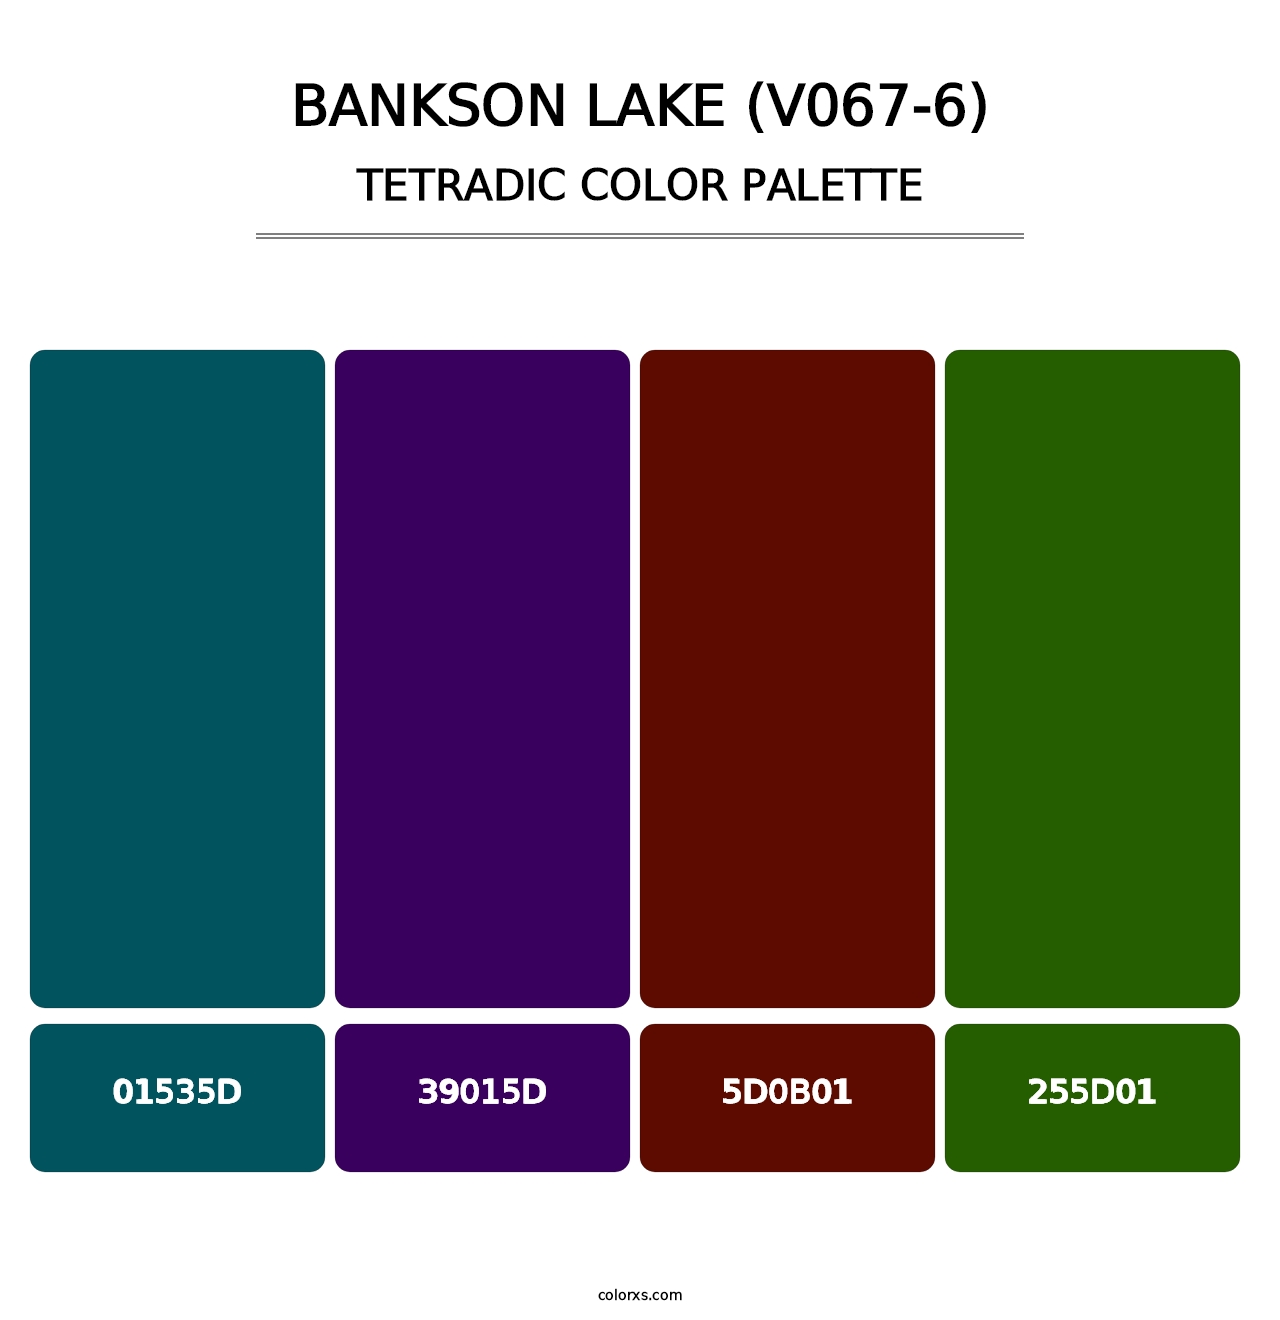 Bankson Lake (V067-6) - Tetradic Color Palette